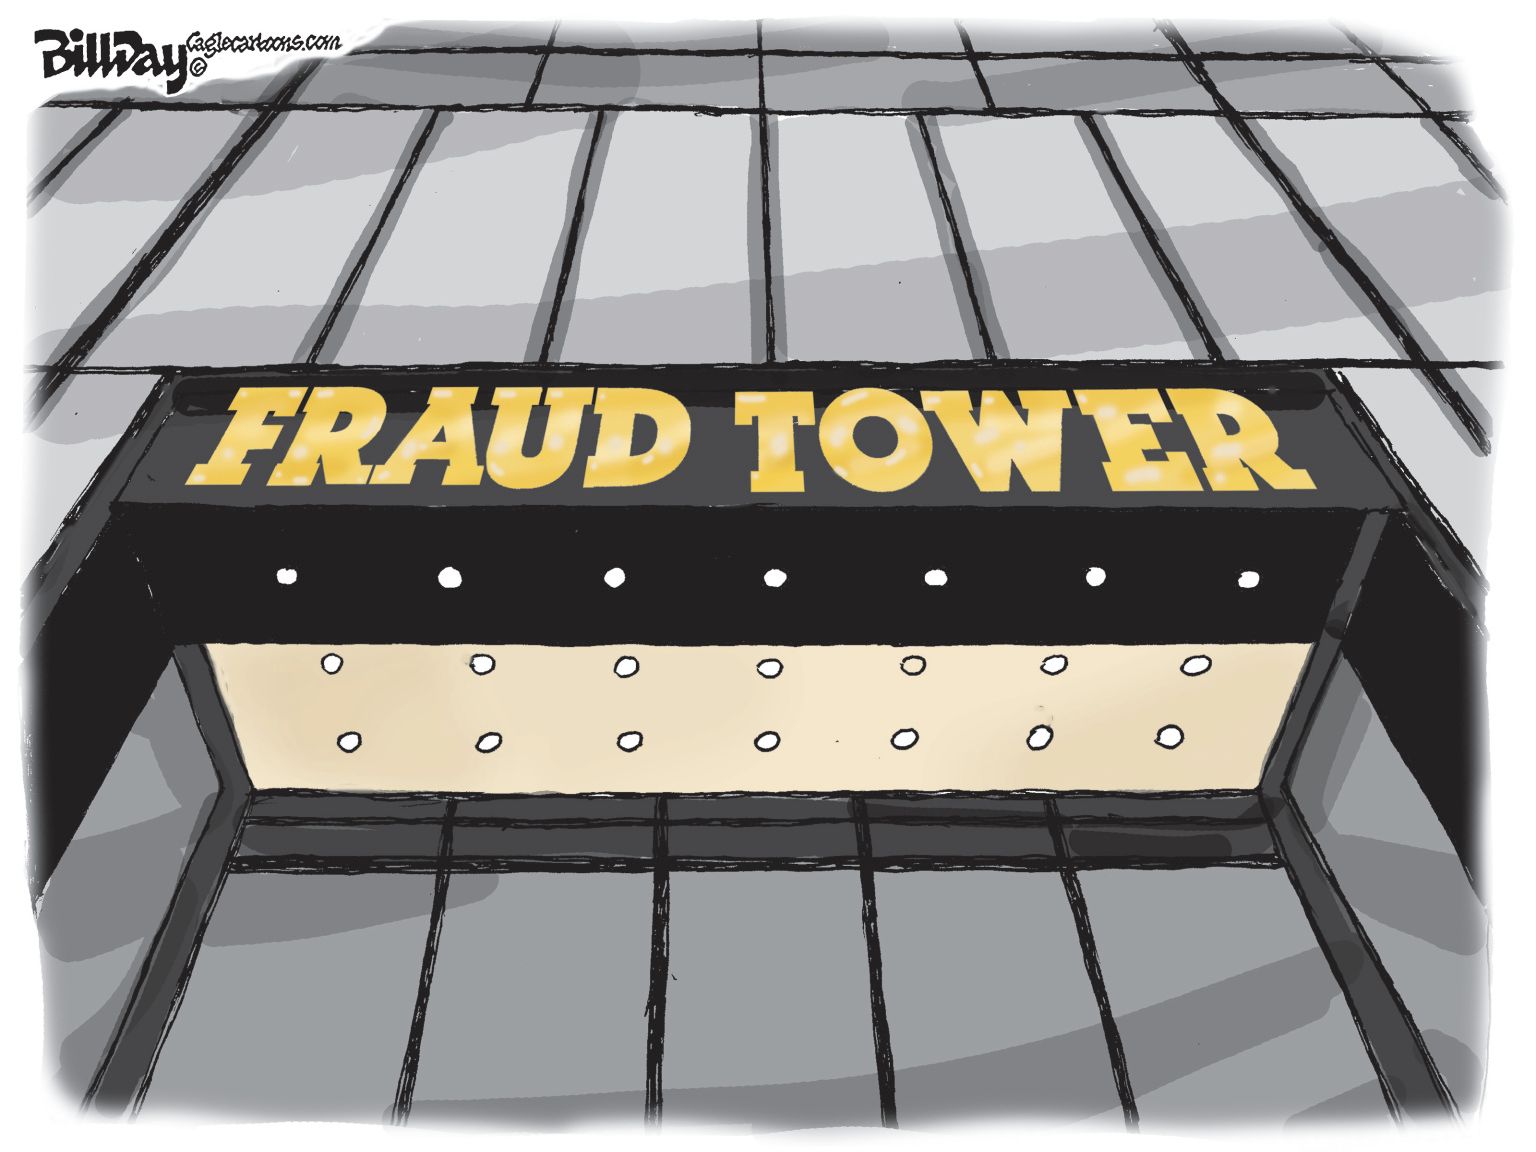 Fraud Tower - newsjustin.press - political cartoon